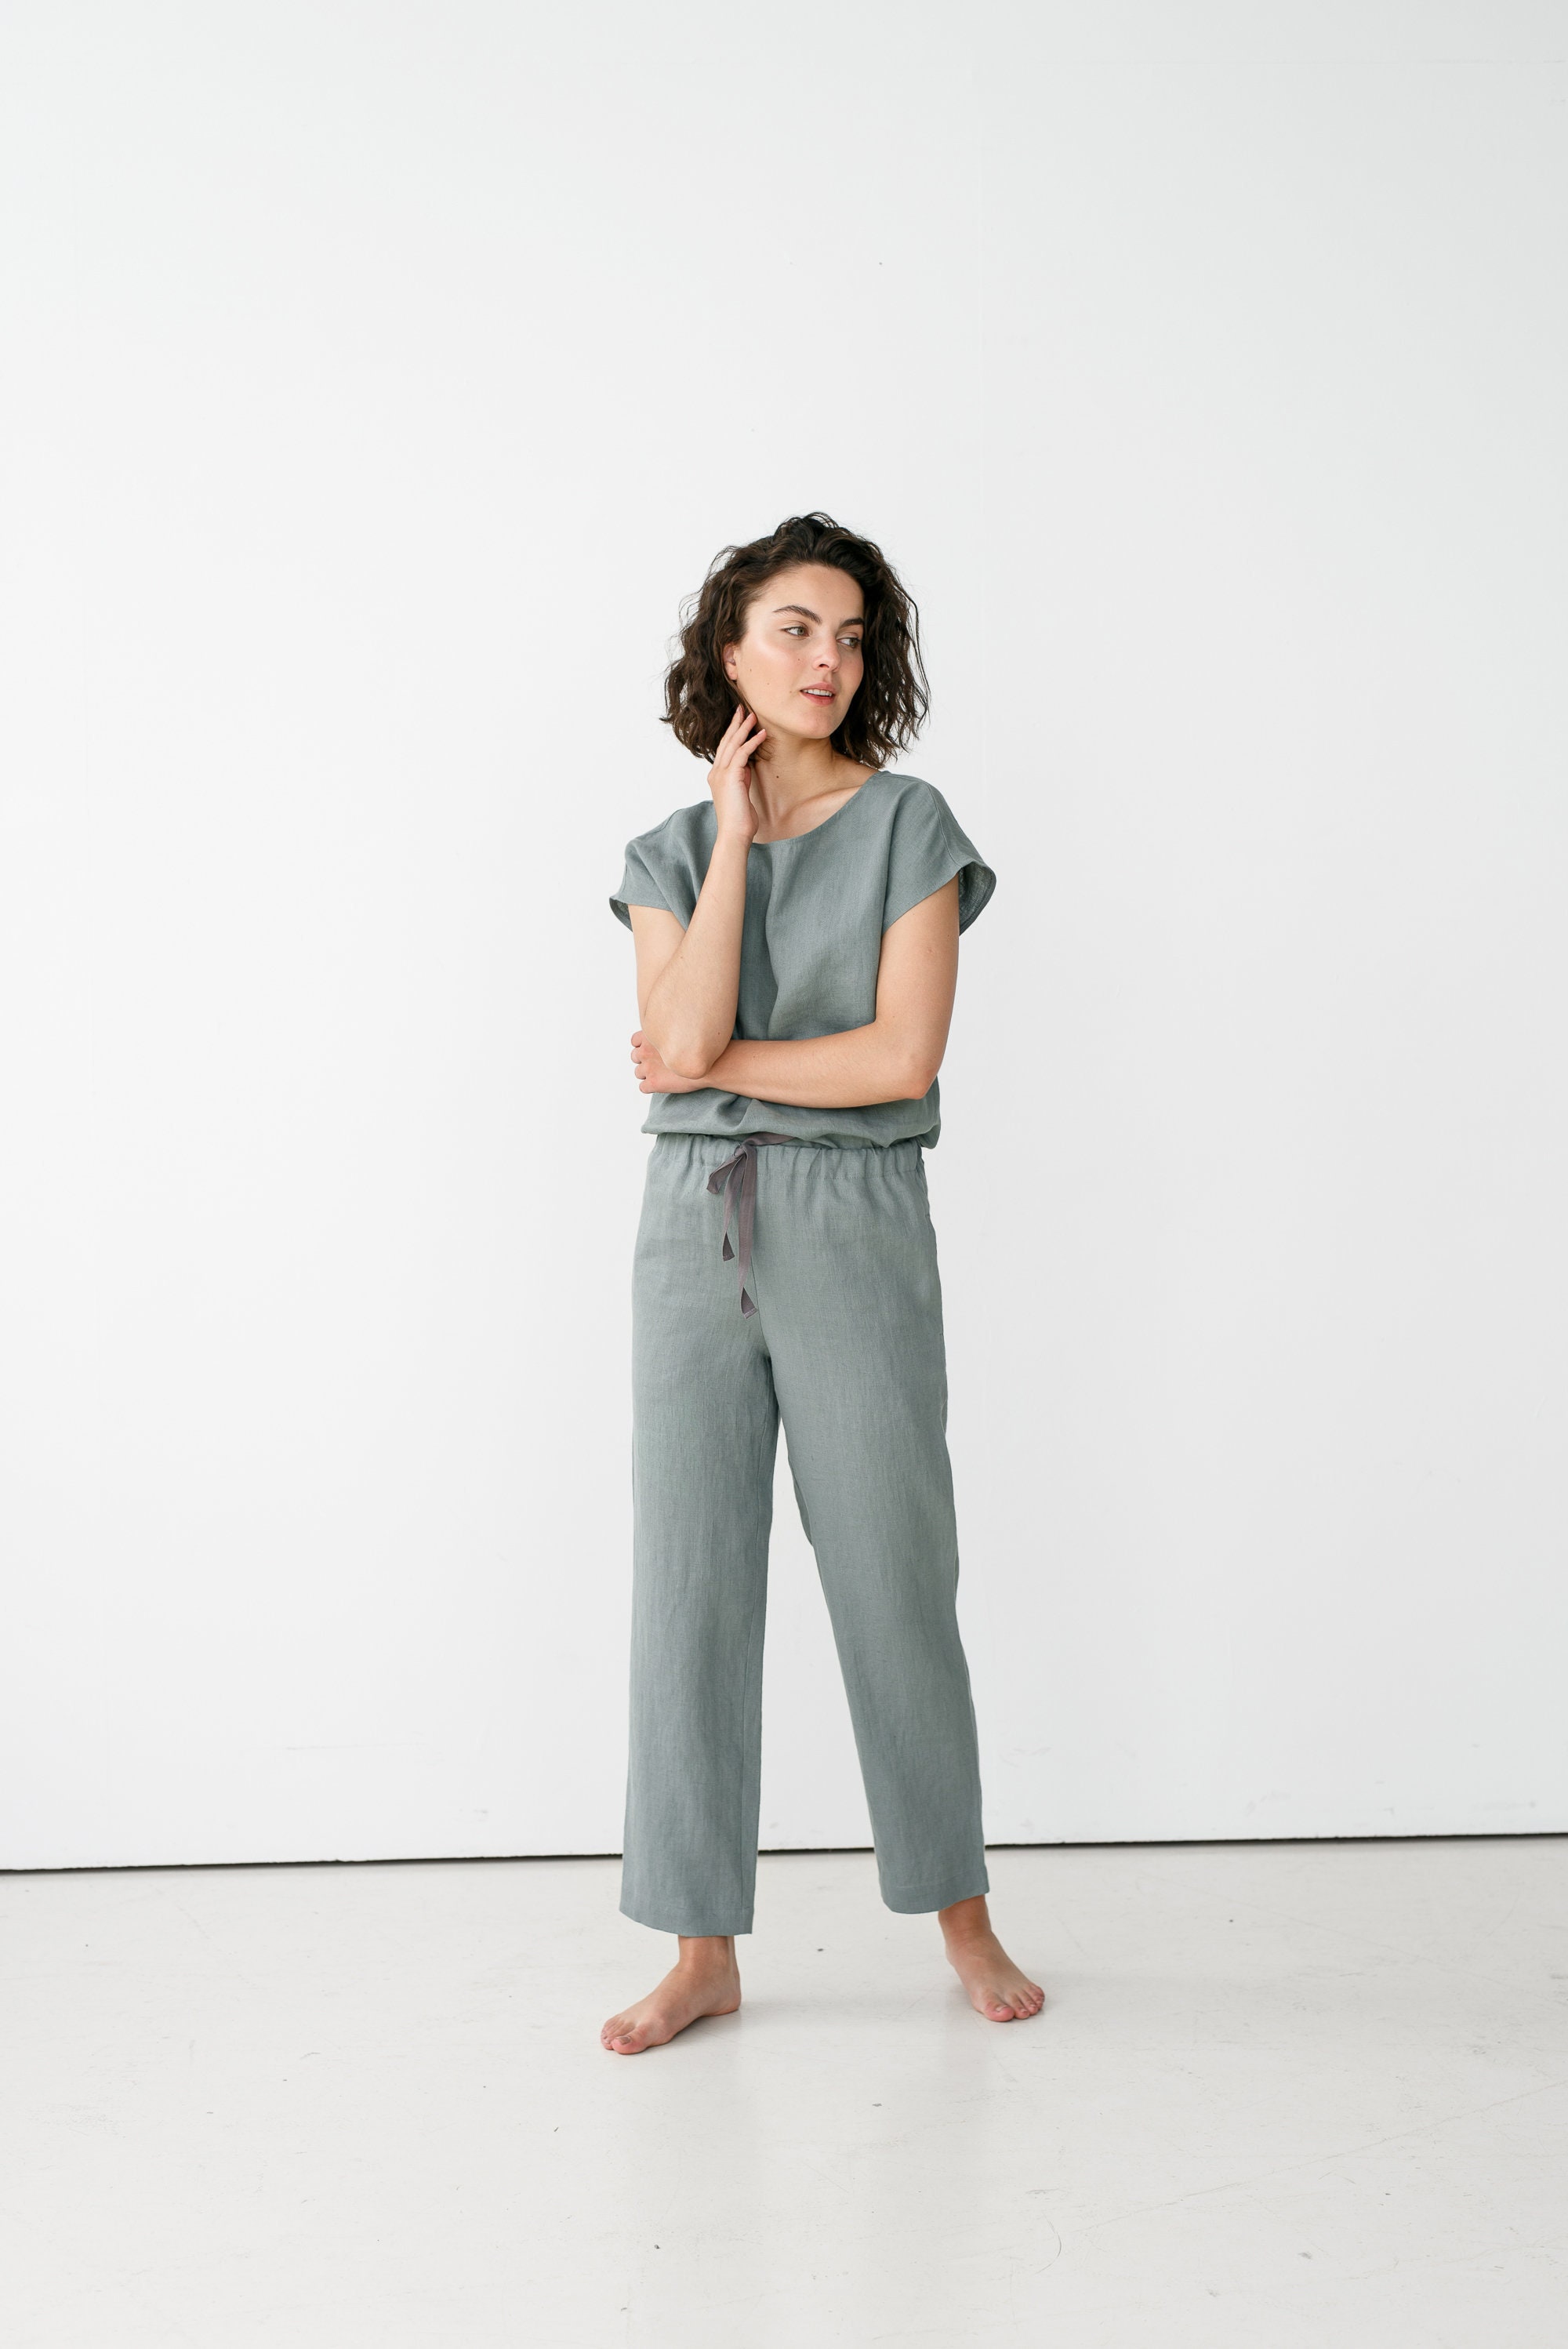 Linen sleepwear / Linen kimono top / Linen pants / Linen | Etsy